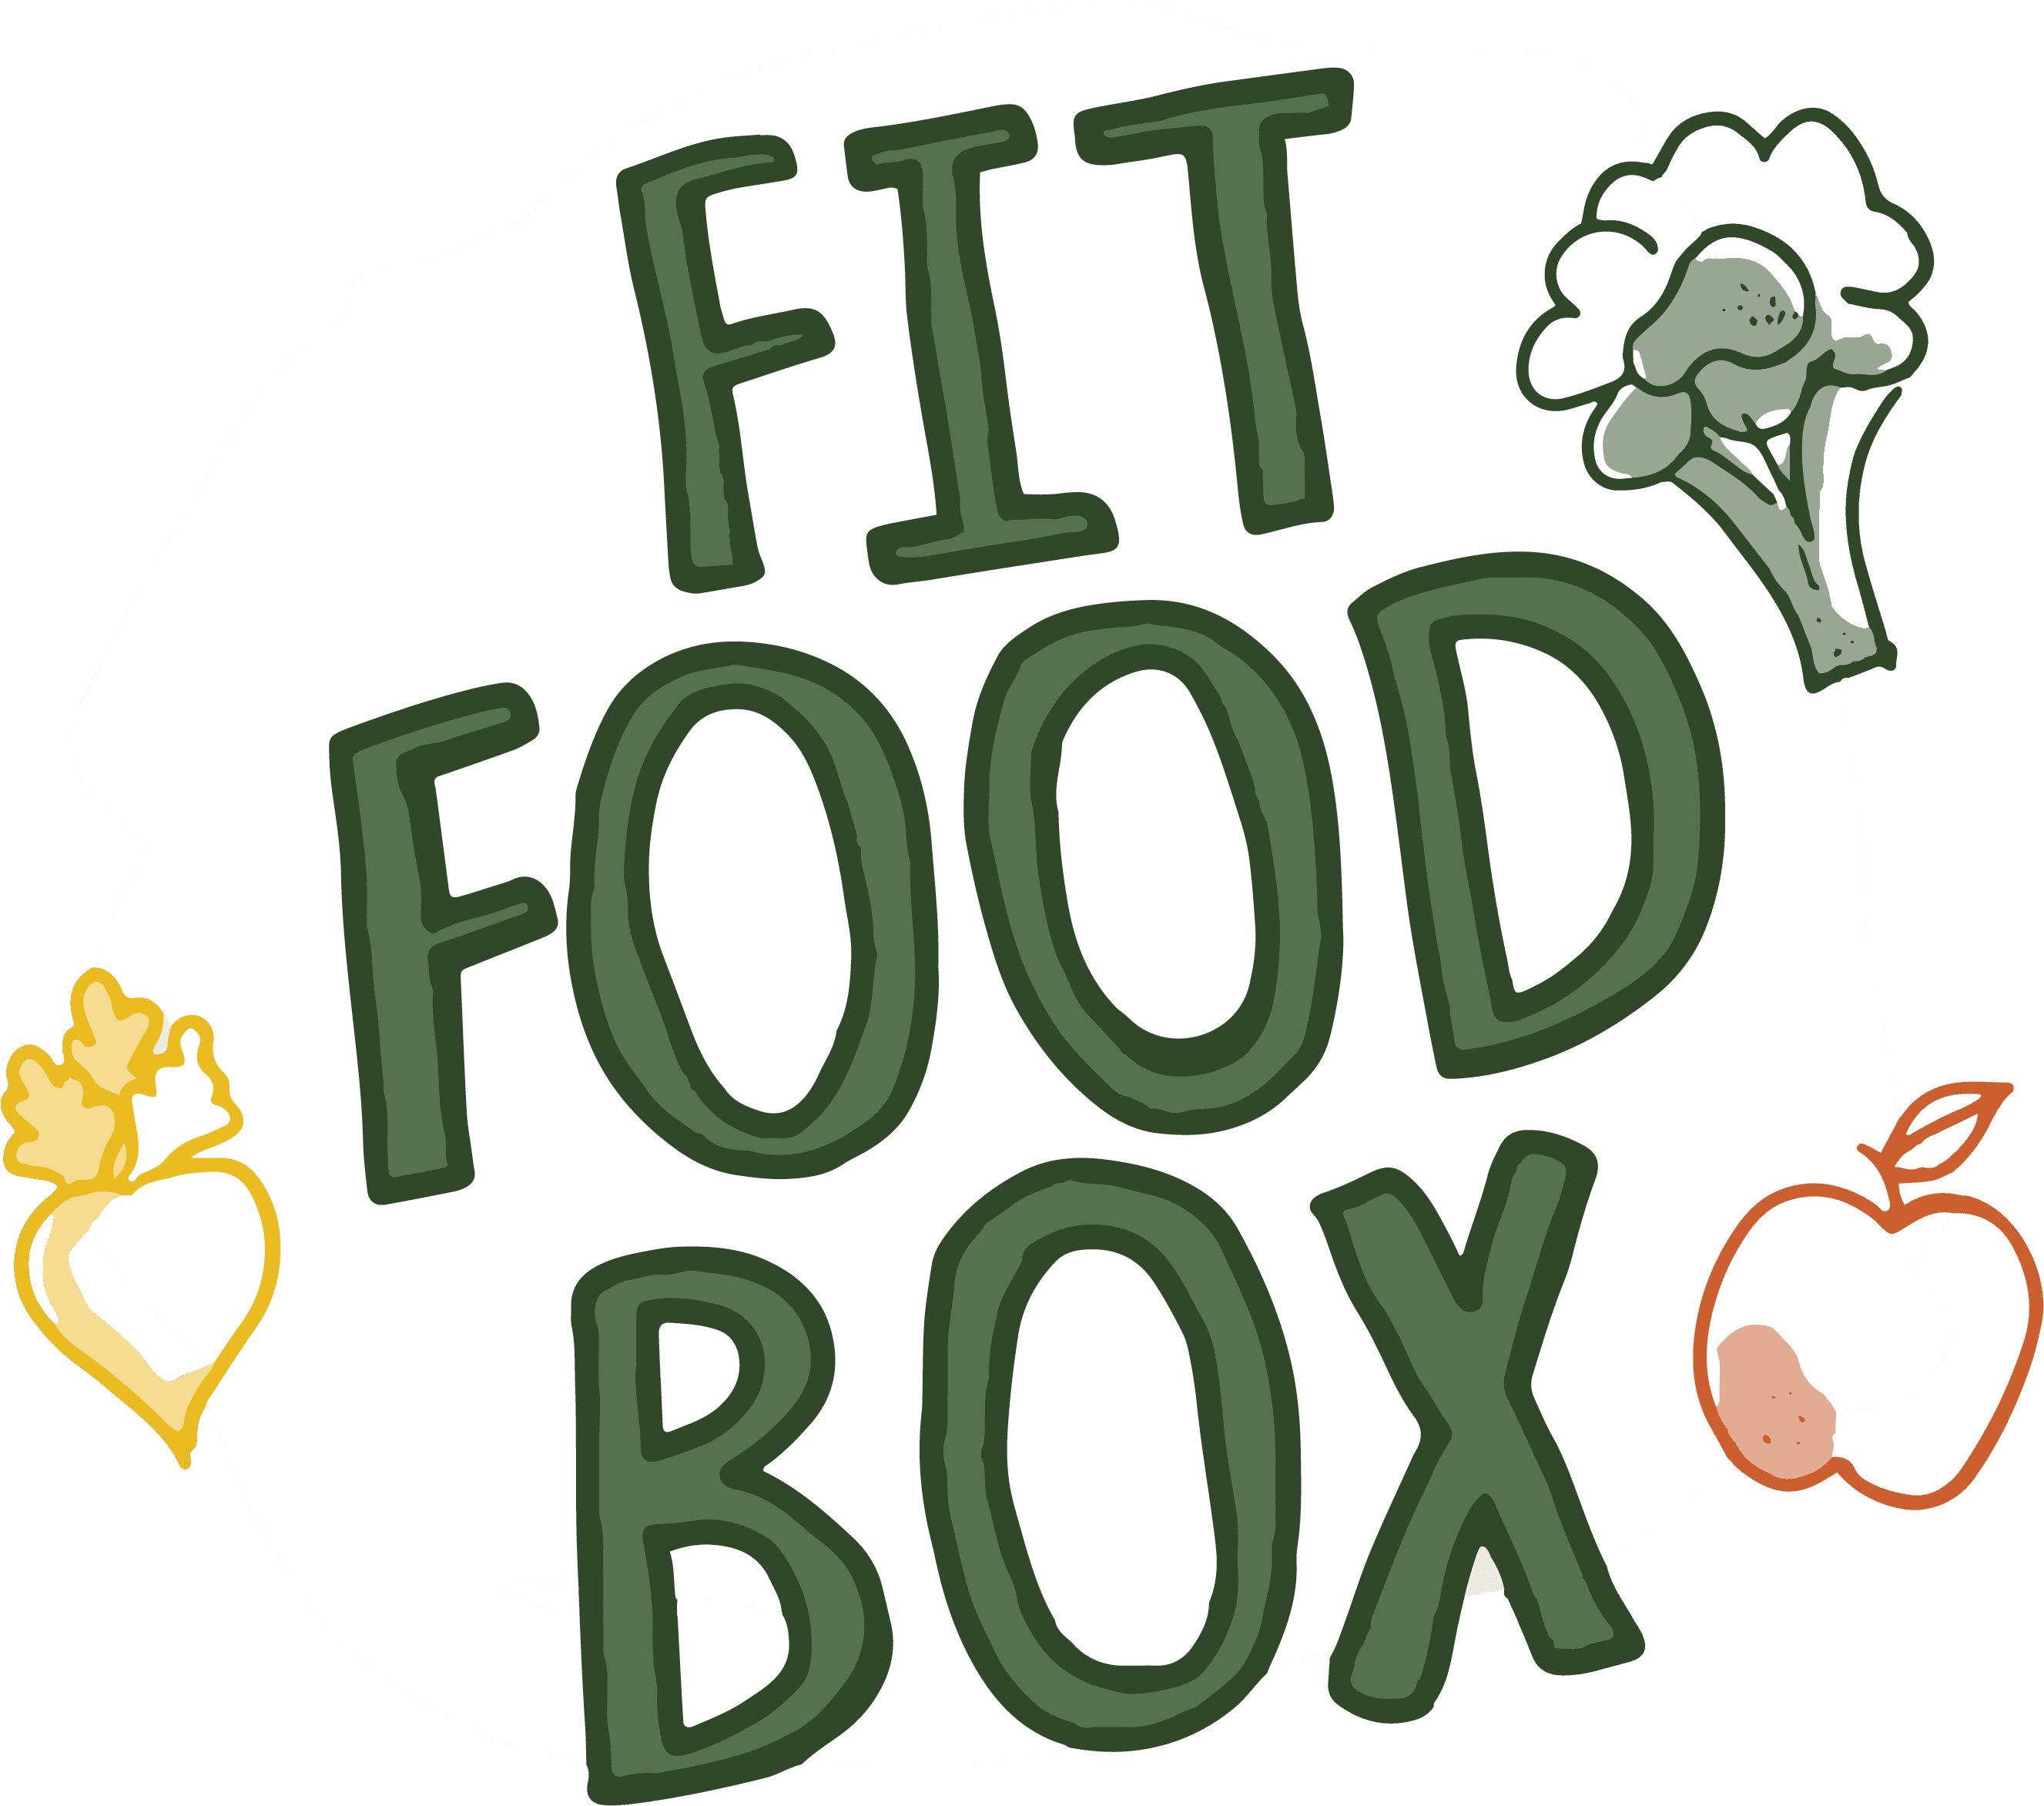 Fit Food Box - Bistro, Abhol- & Lieferservice für Bowls, Salate, Porridge in Kassel - Logo der Fit Food Box Kassel